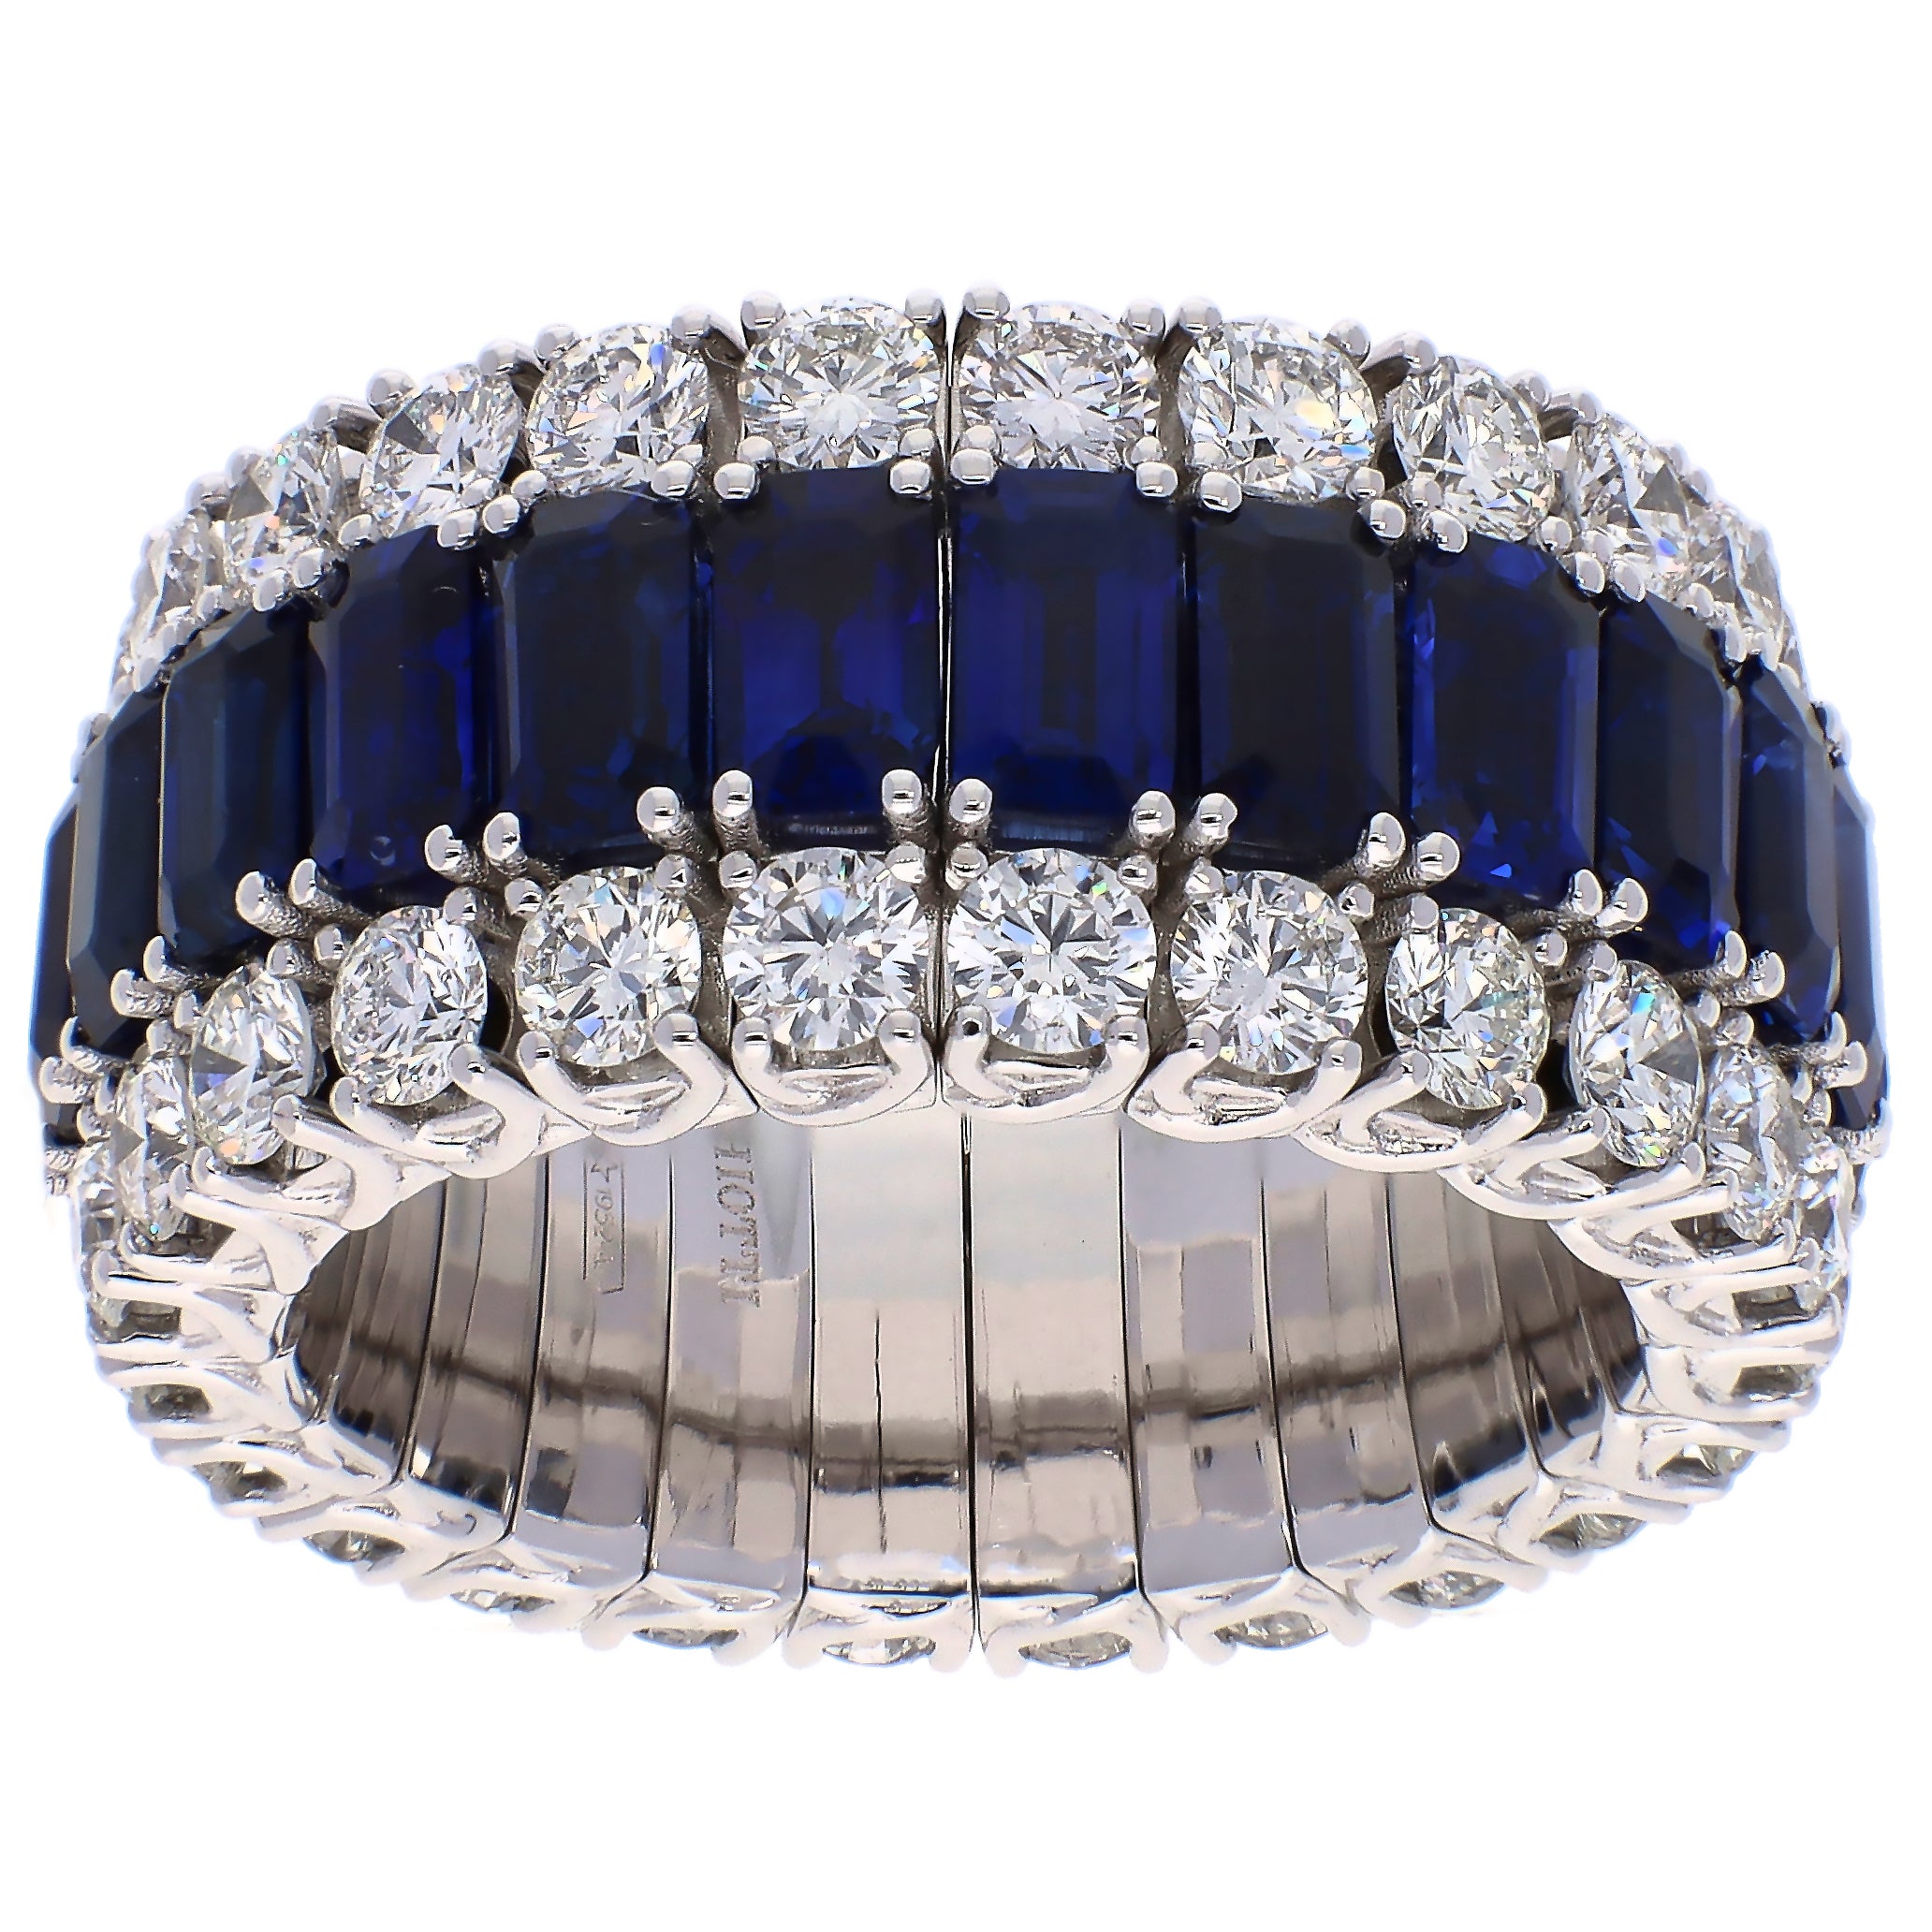 Picchiotti Xpandable 18K White Gold Sapphire and Diamond Band Ring